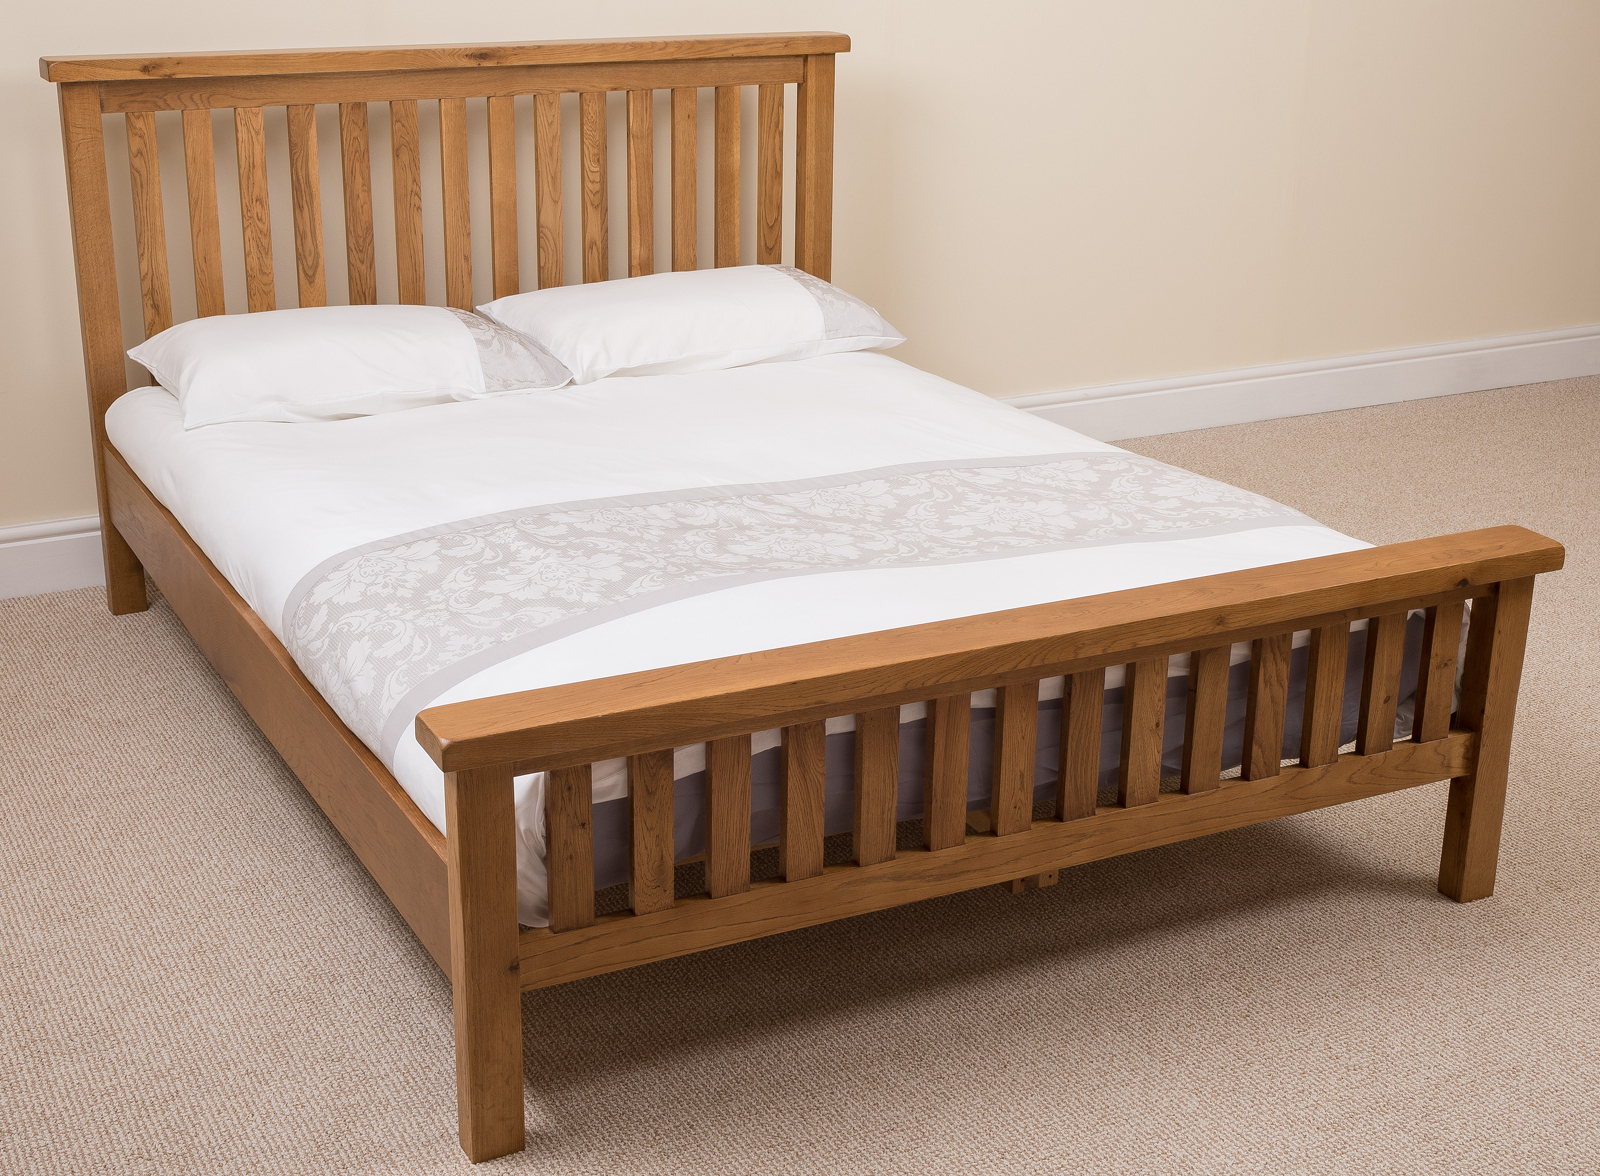 cotswold beds mattresses reviews